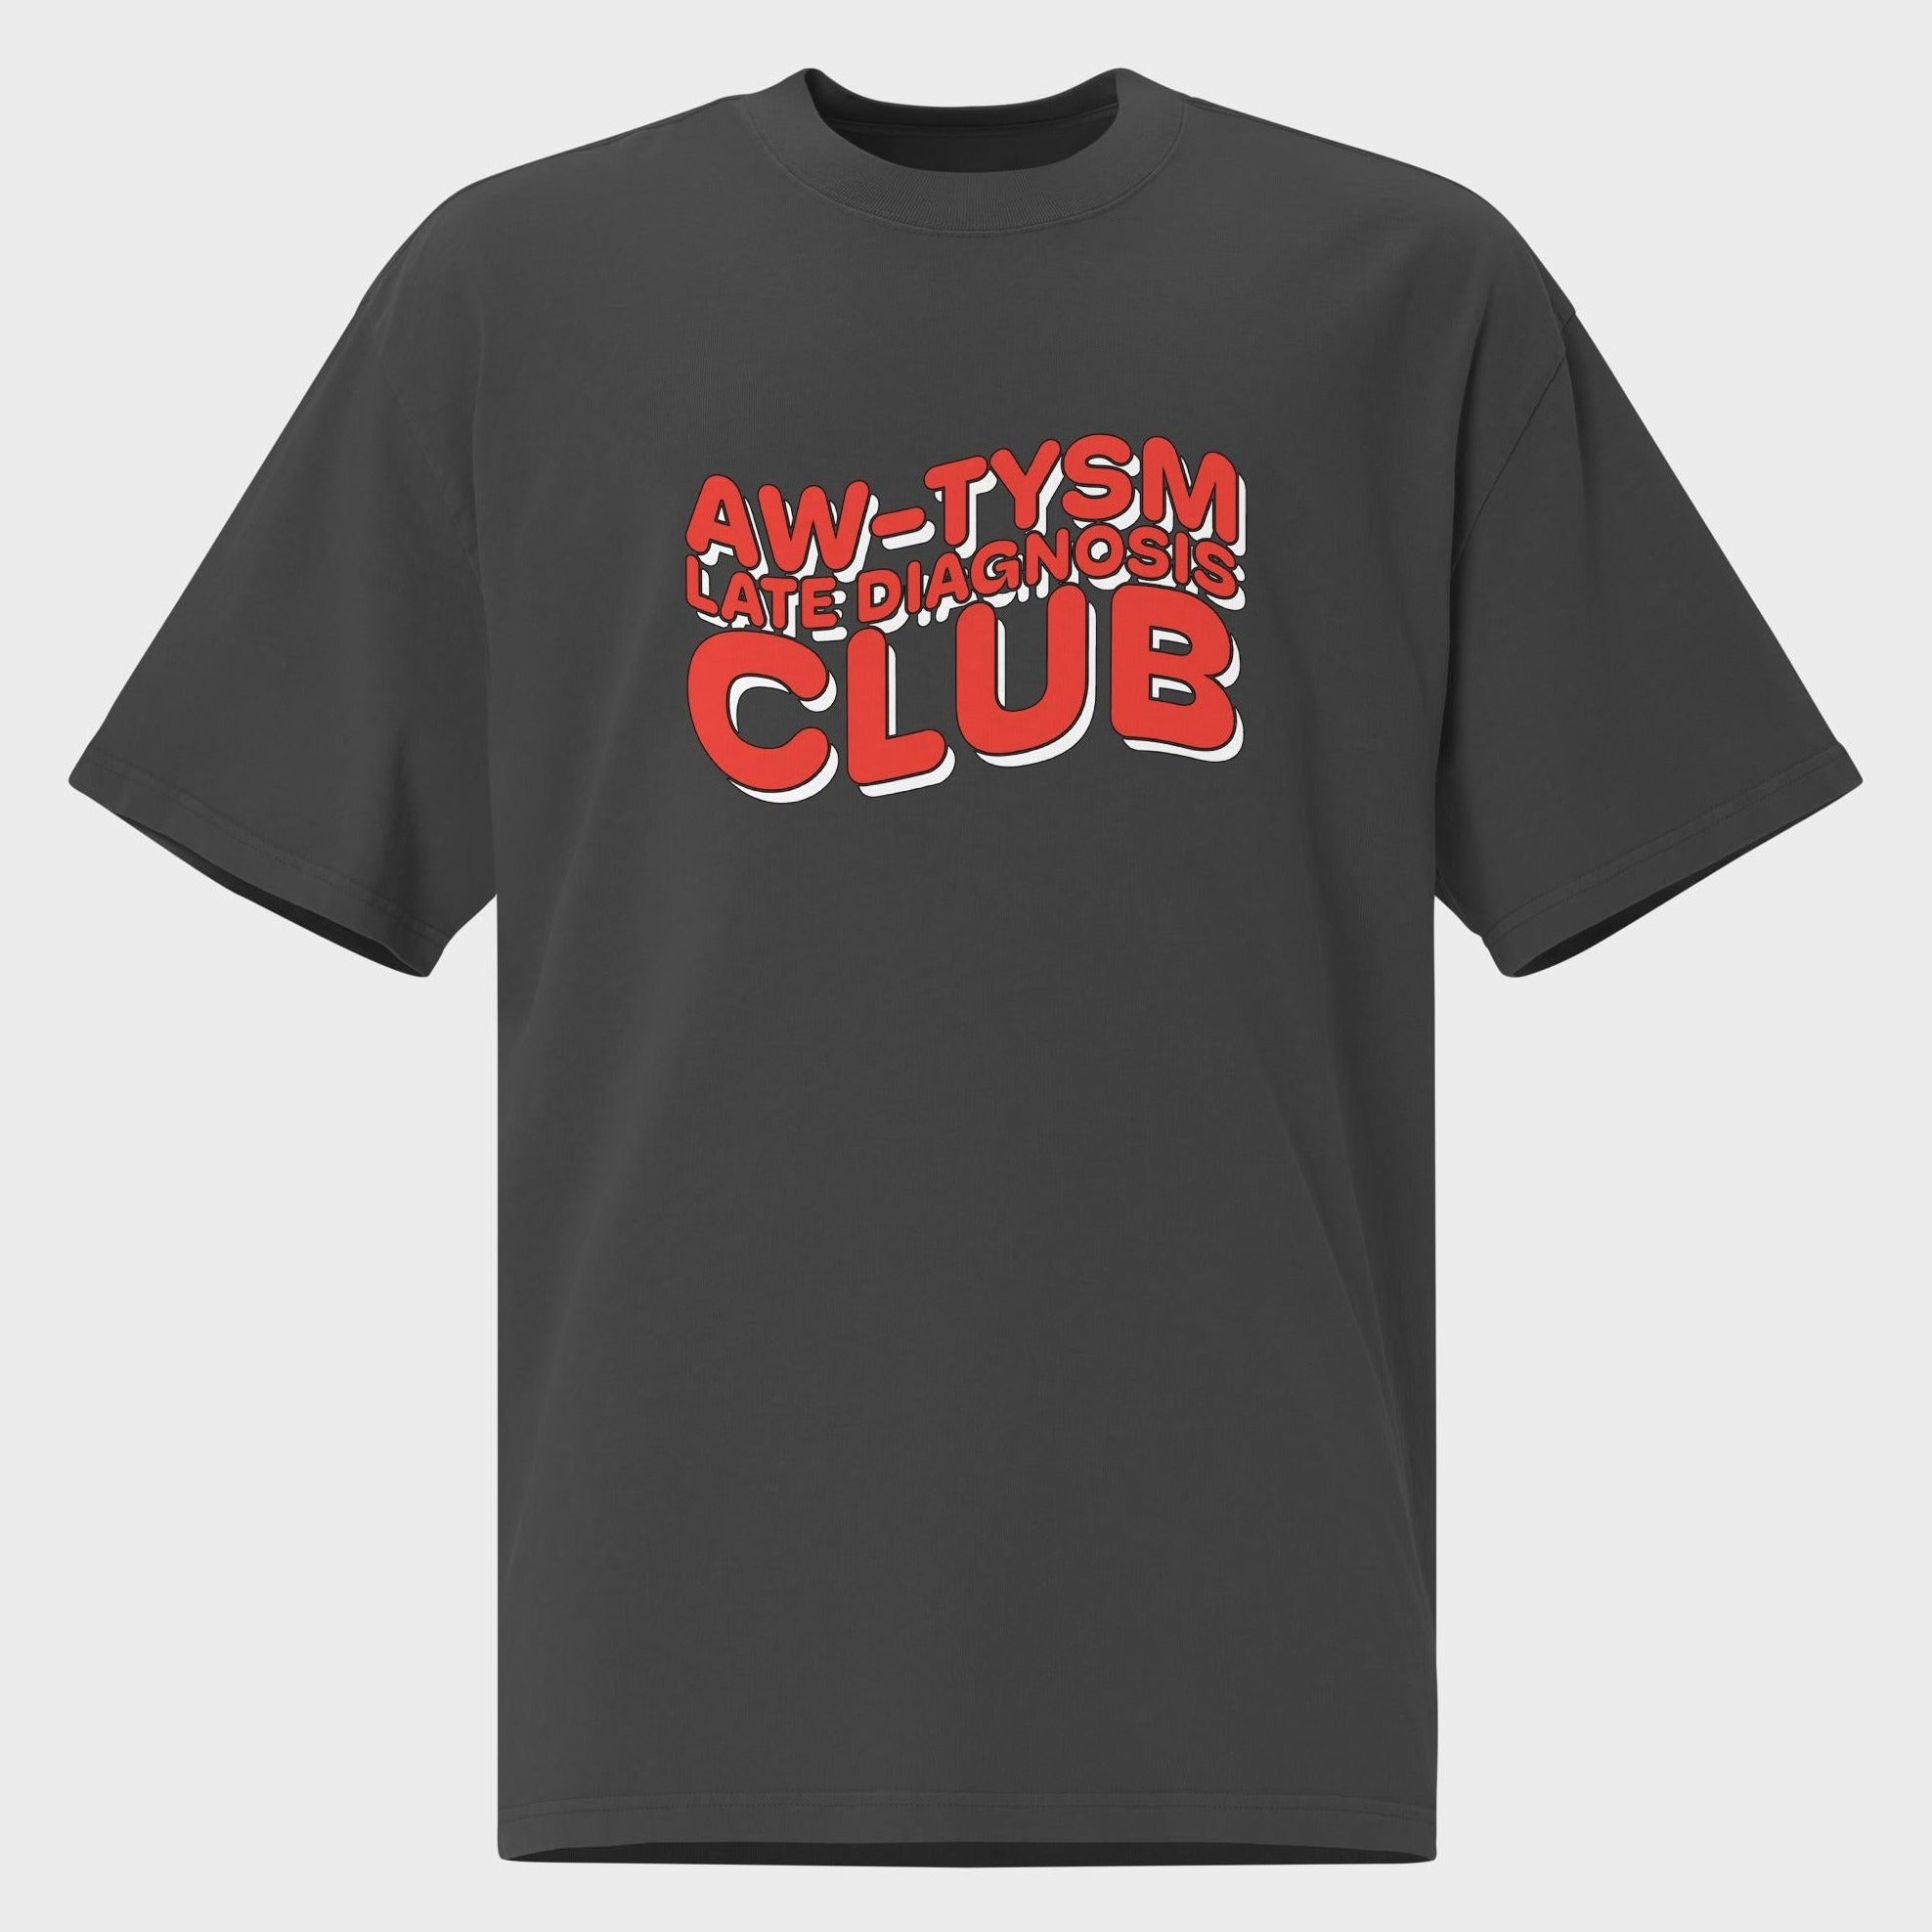 Aw-tysm Late Diagnosis Club - Oversized T-Shirt